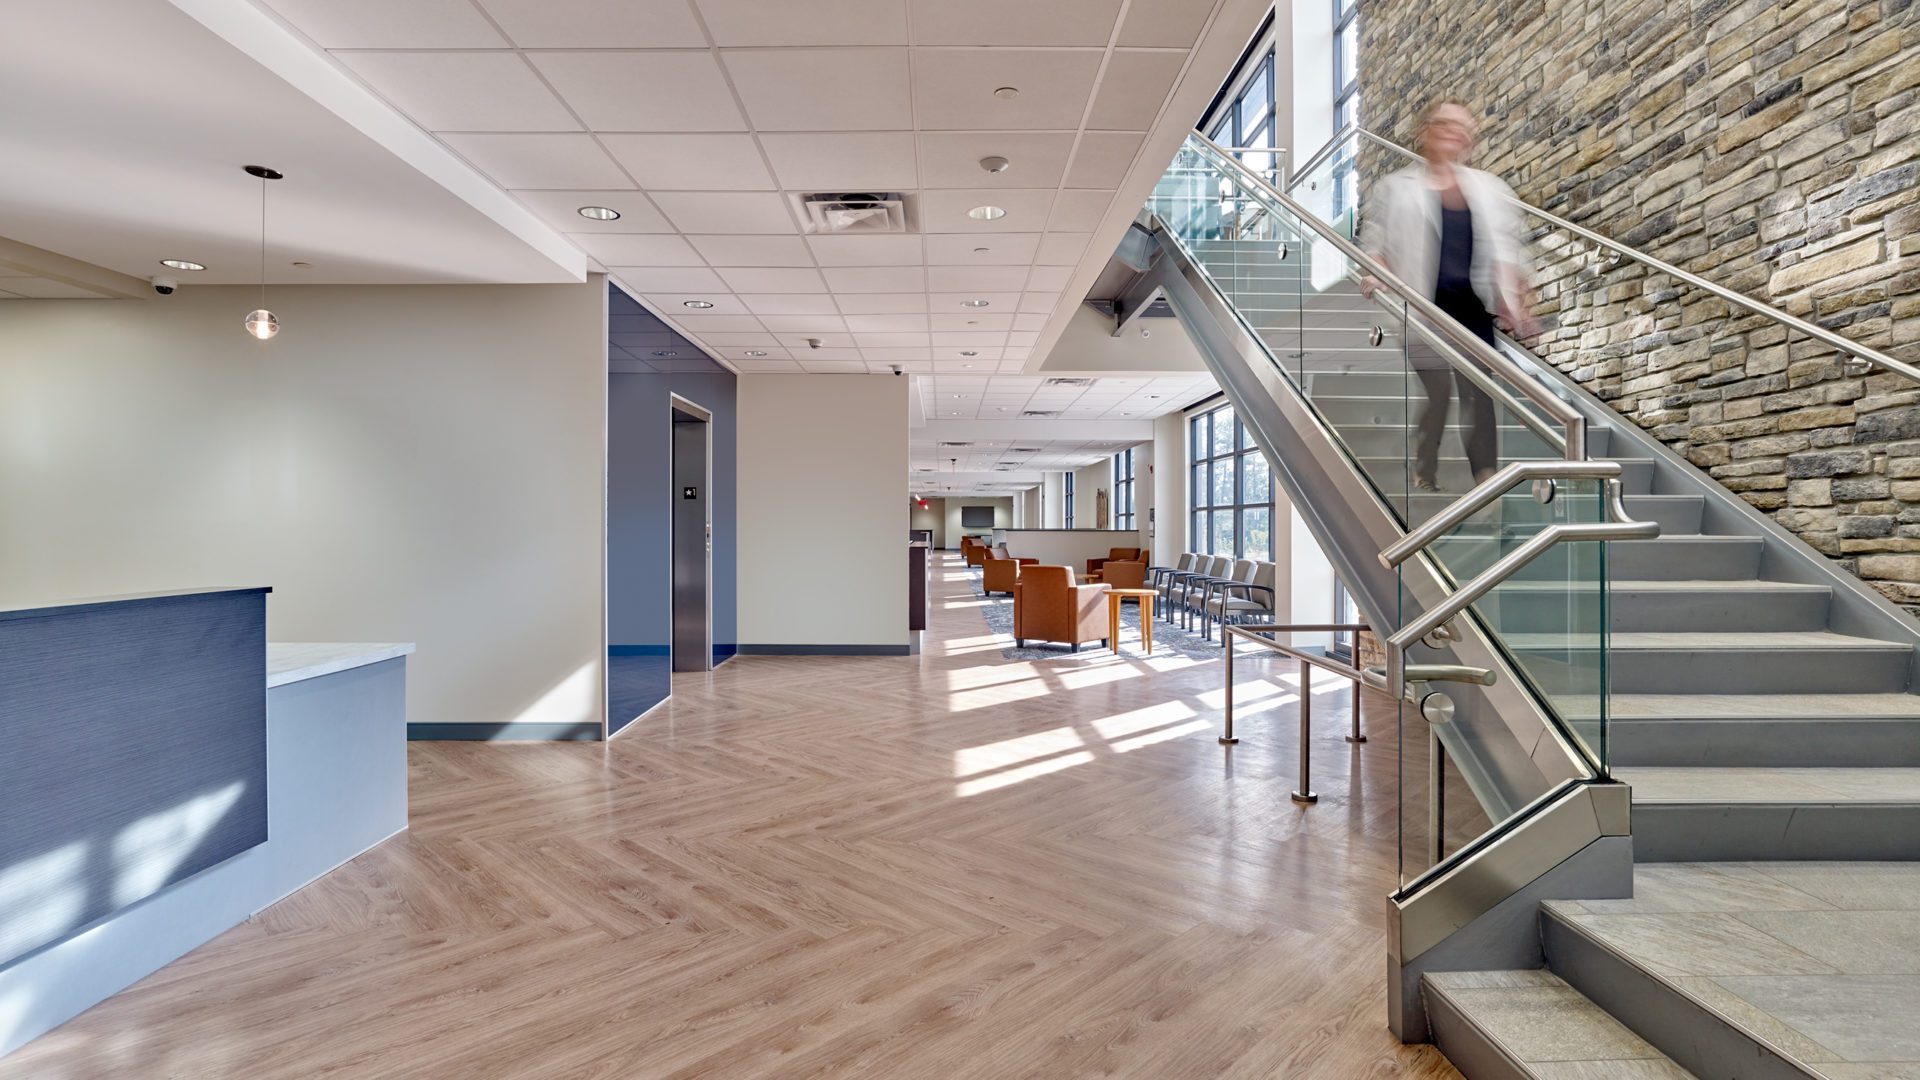 Ocean Health Interior Hallway and Stairwell featuring calm blue interior design